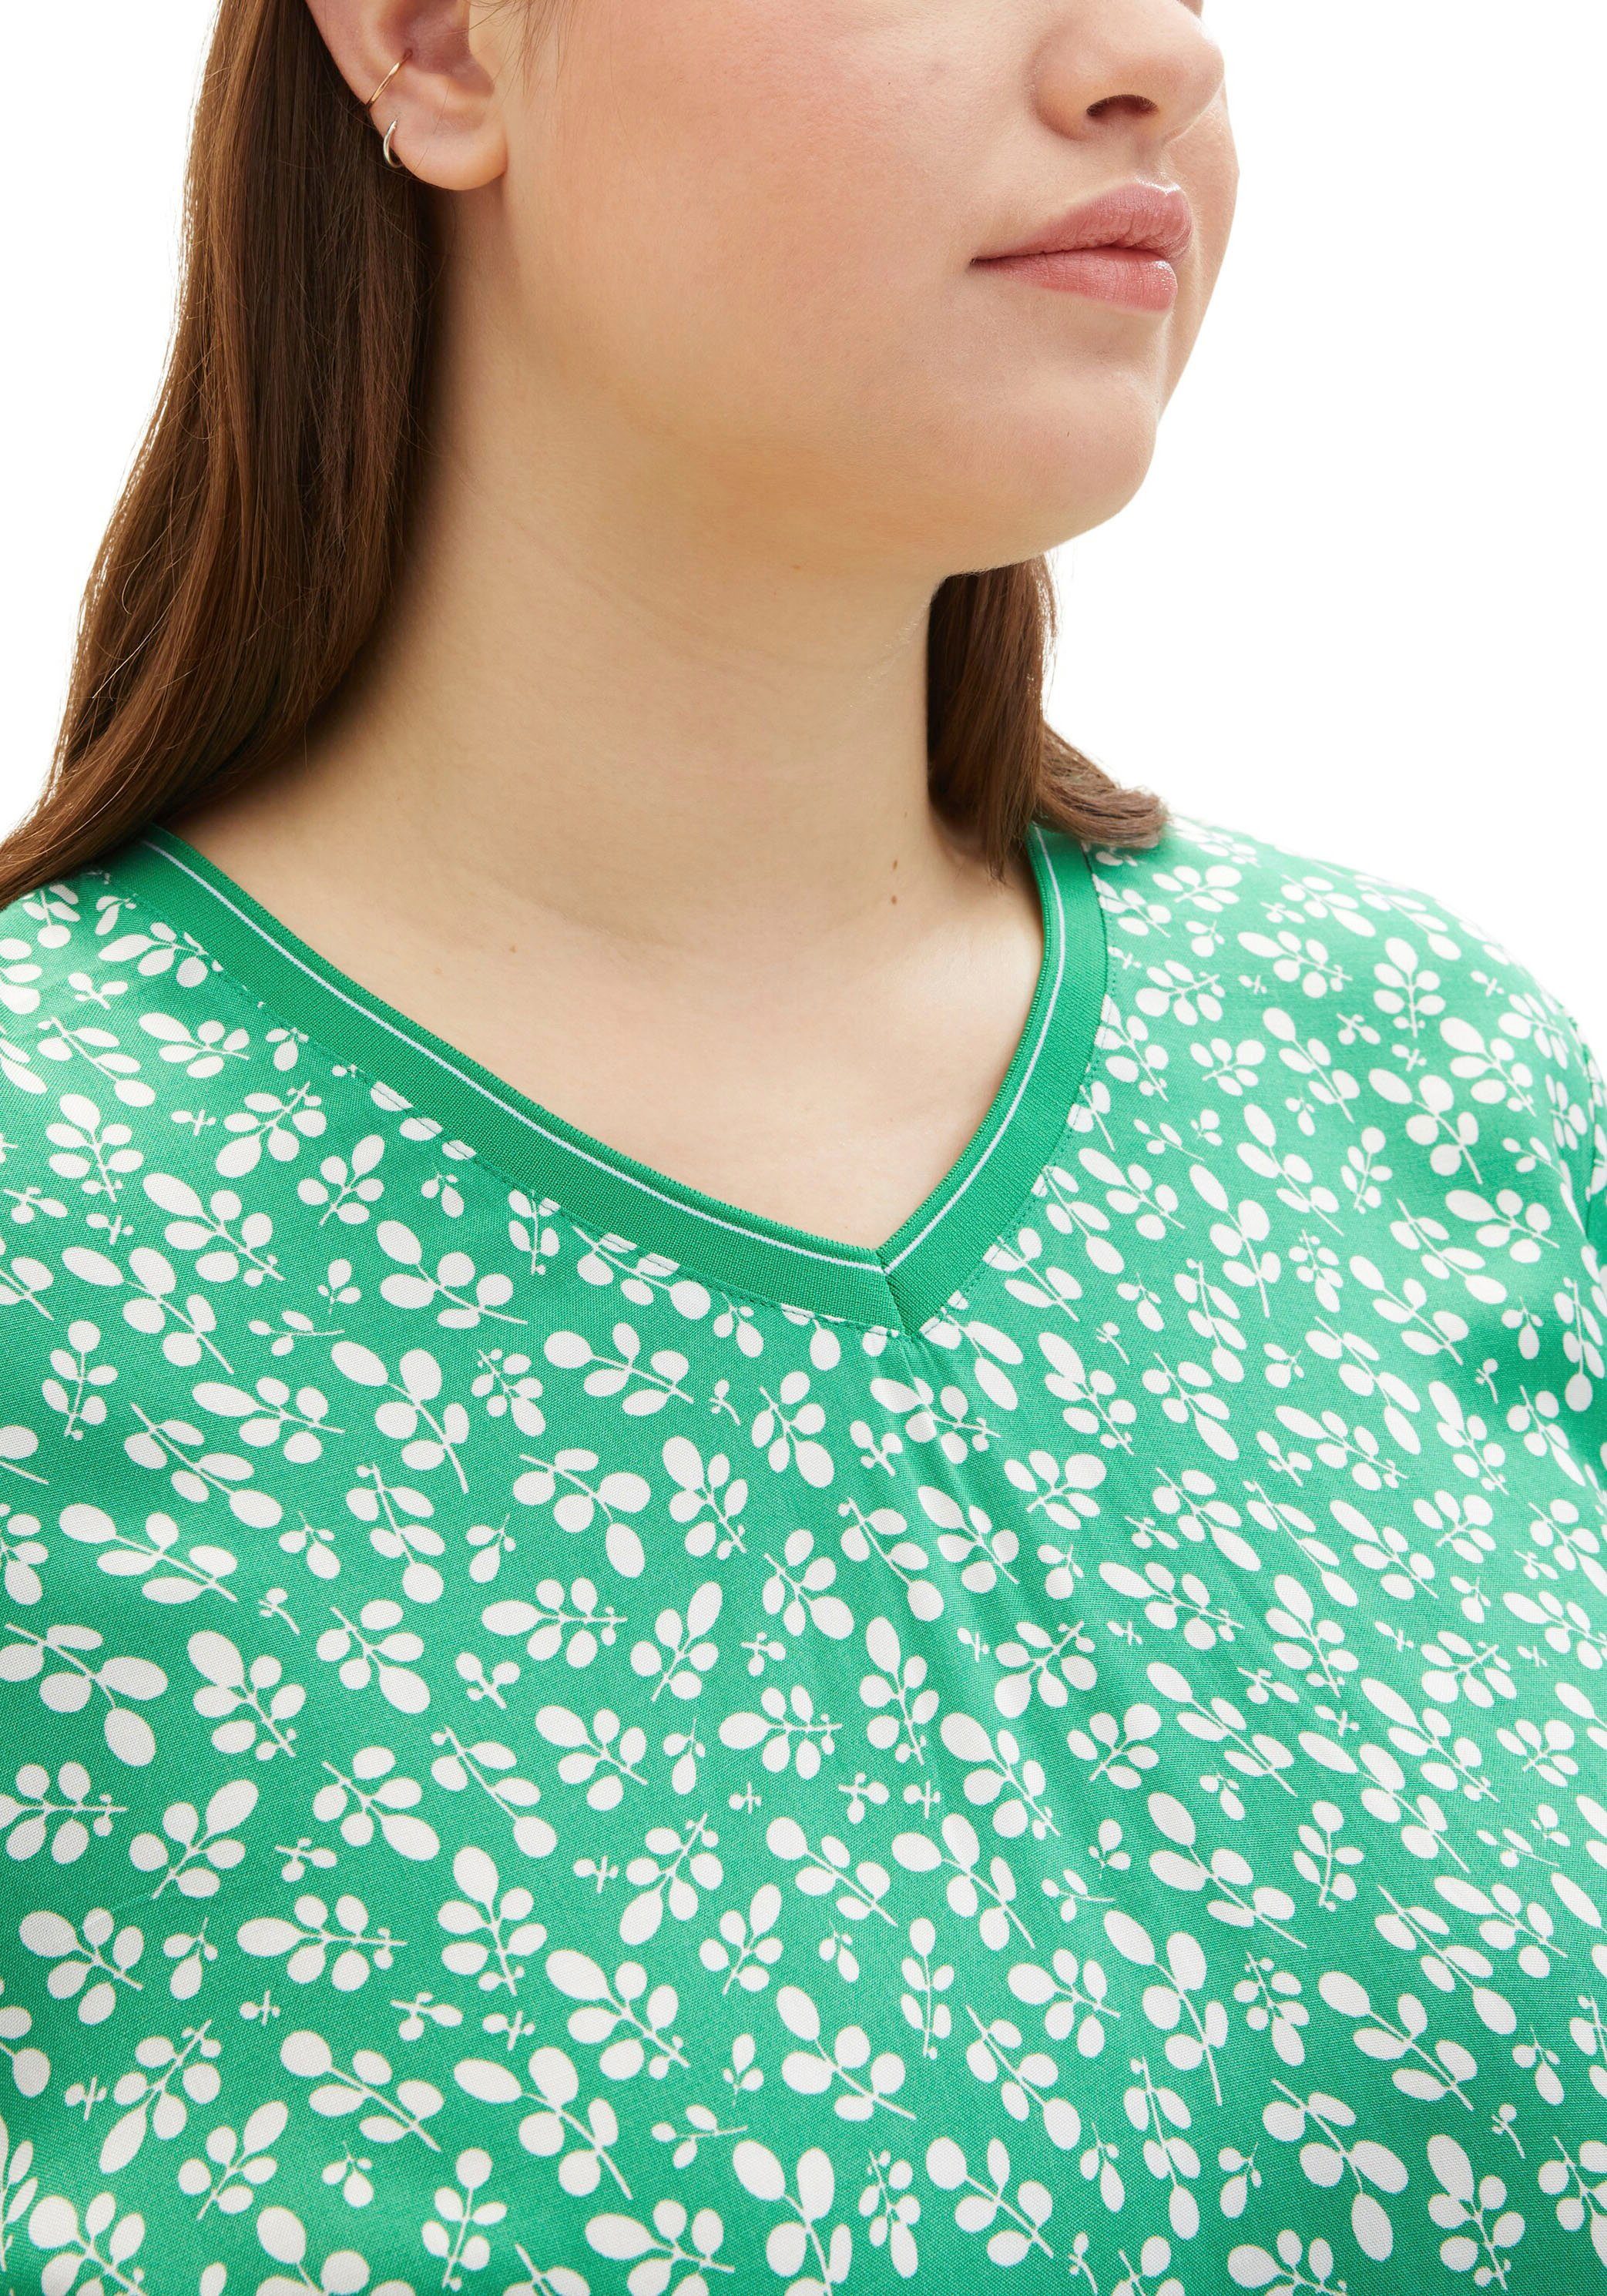 TOM TAILOR PLUS geblümt mit grün 3/4-Arm-Shirt floralem weiß Muster